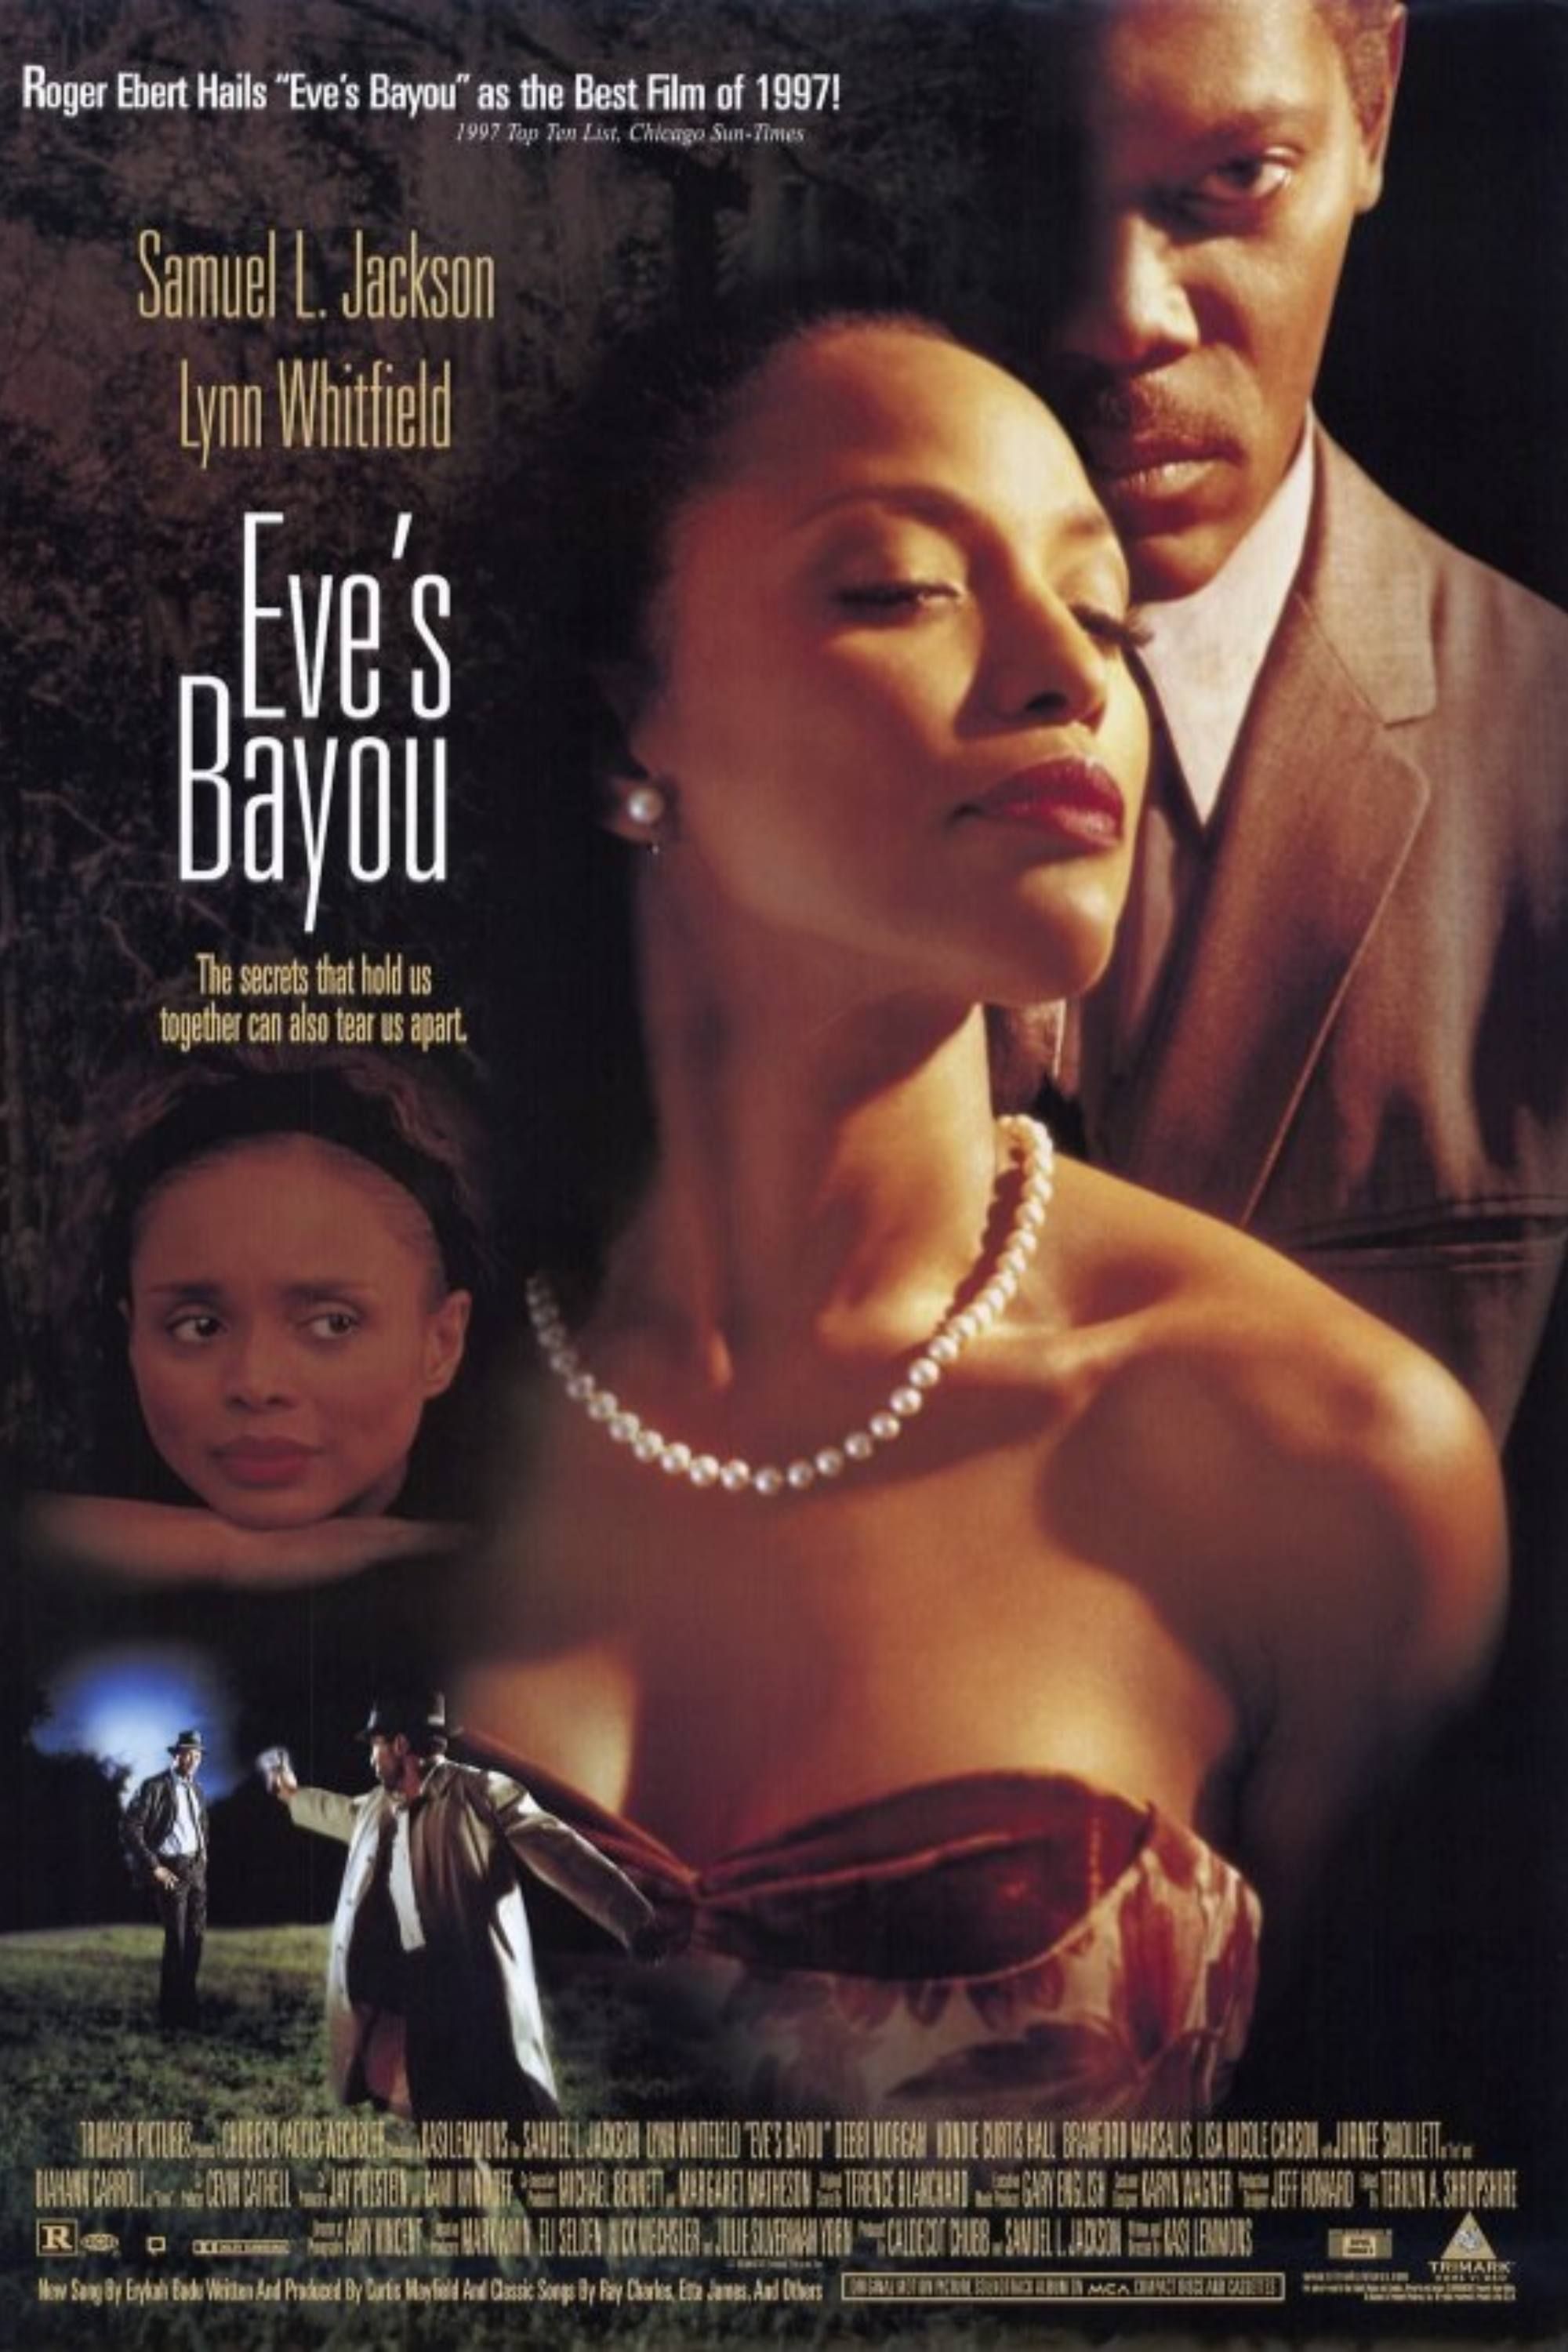 Eve's Bayou - Pôster - Samuel Jackson e Lynn Whitfield